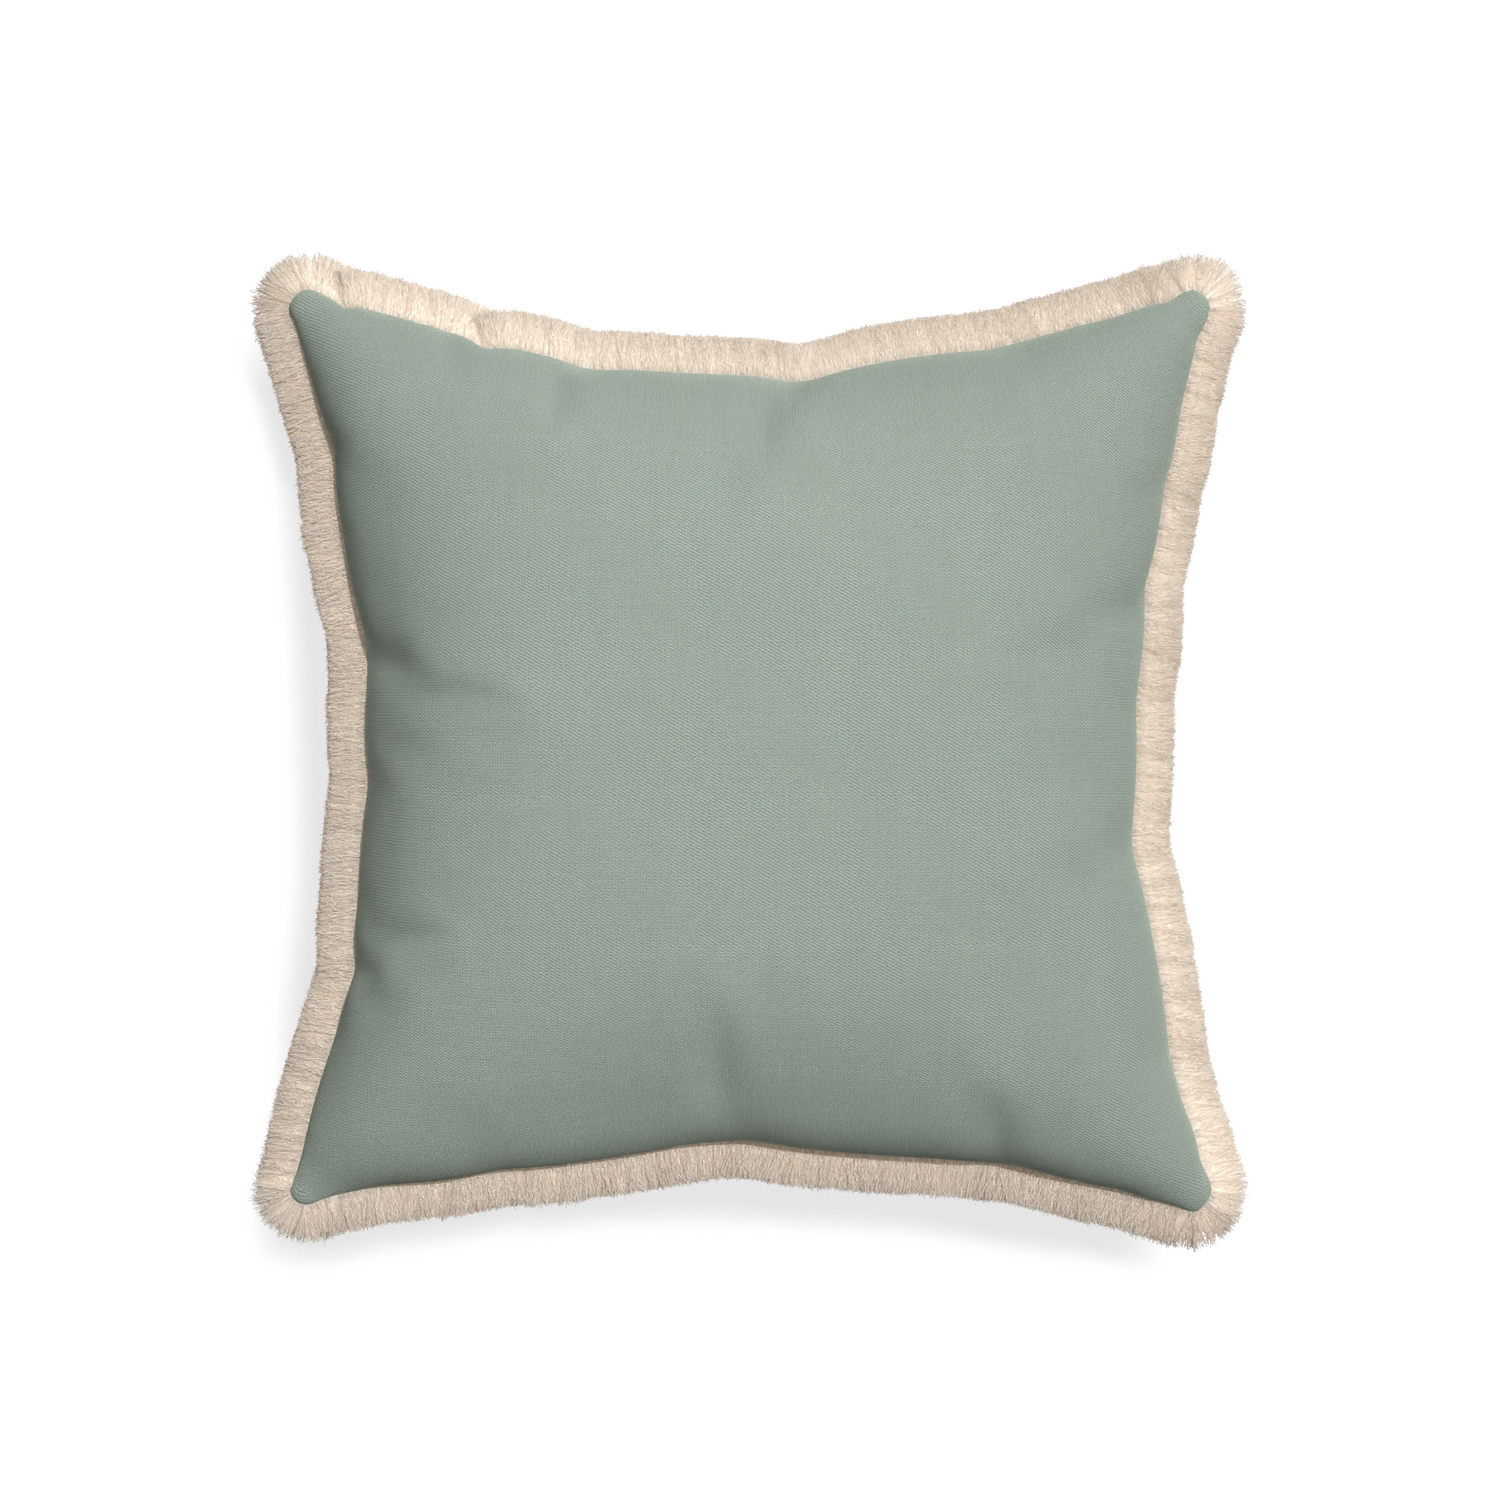 20-square sage custom pillow with cream fringe on white background